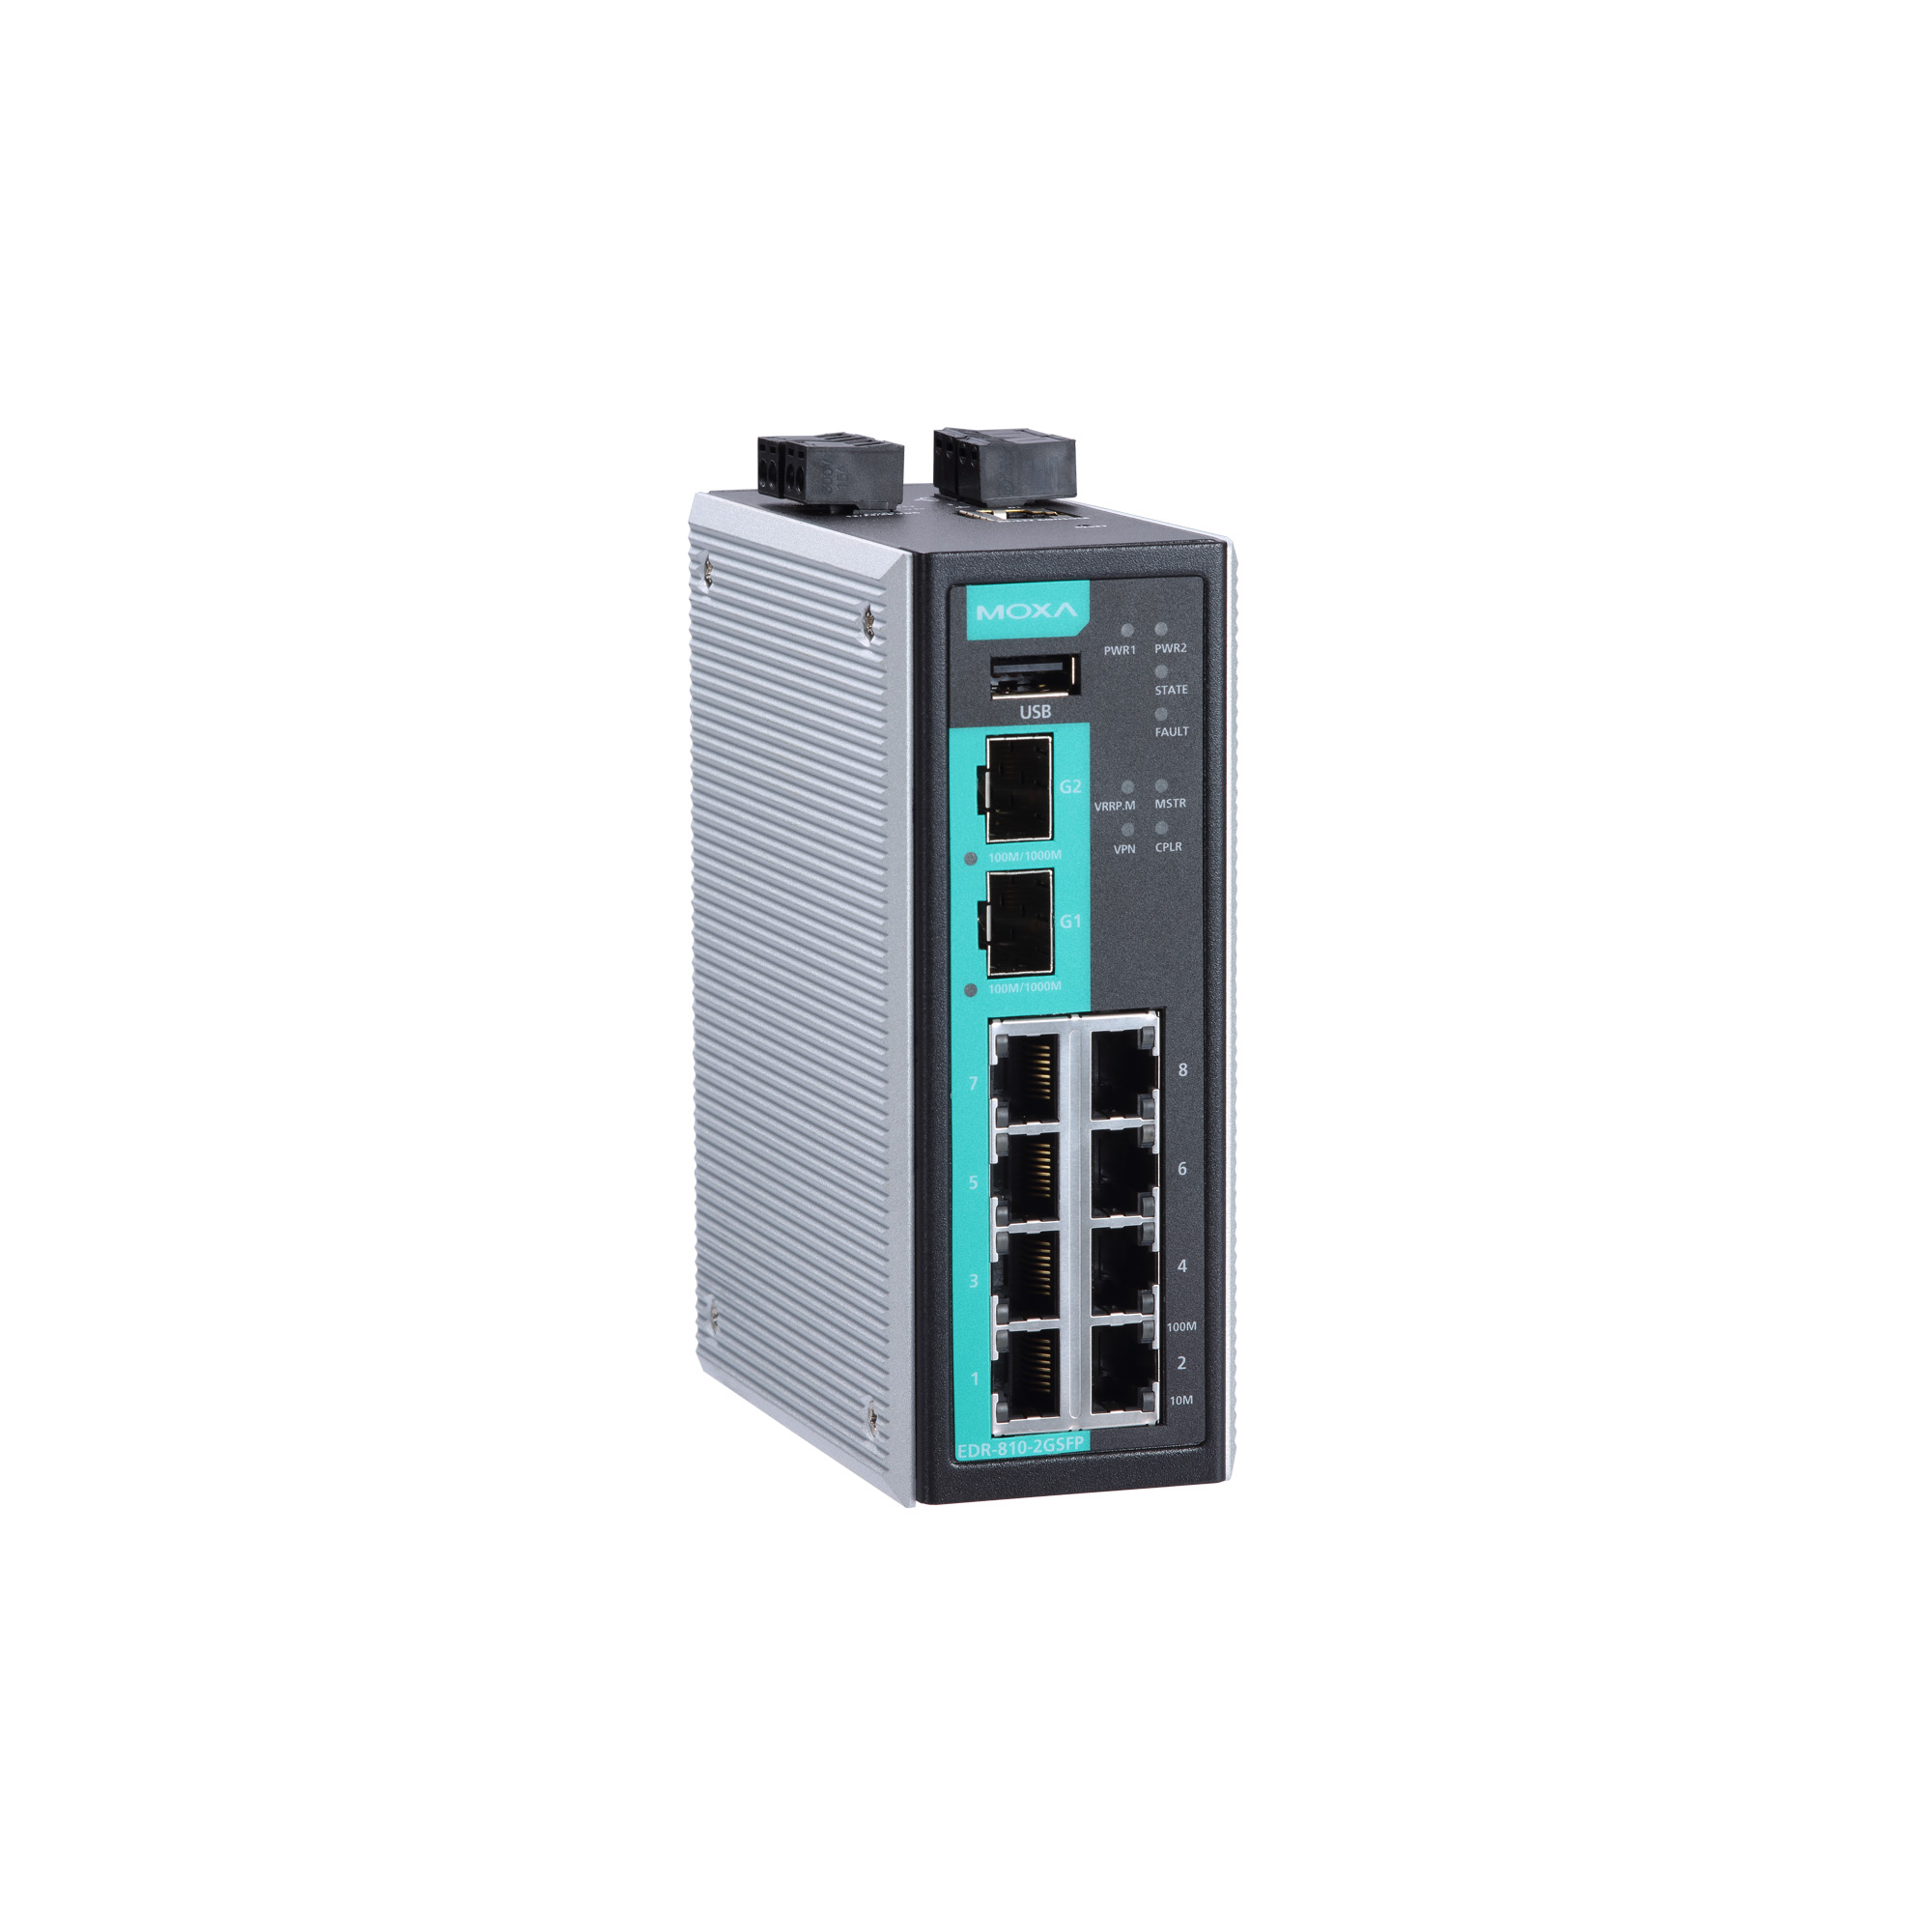 Bộ định tuyến bảo mật EDR-810 MOXA EDR-810-VPN-2GSFP MOXA Vietnam - 8 10/100BaseT(X) copper + 2 GbE SFP multiport industrial secure routers